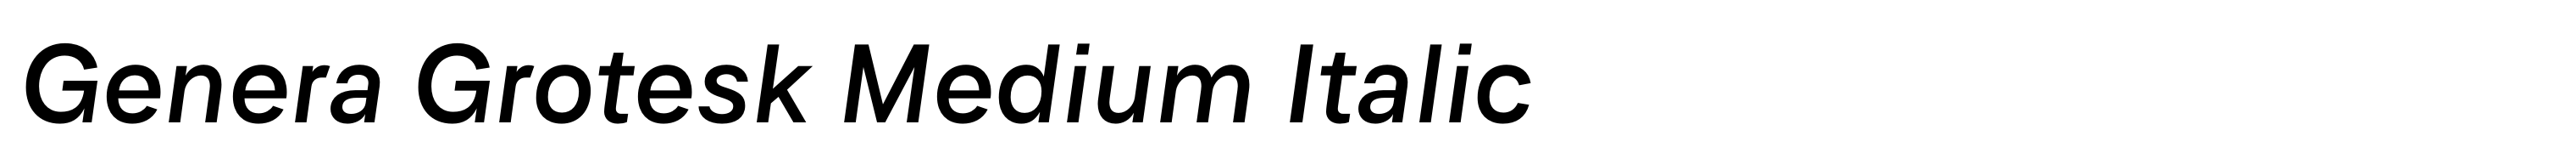 Genera Grotesk Medium Italic